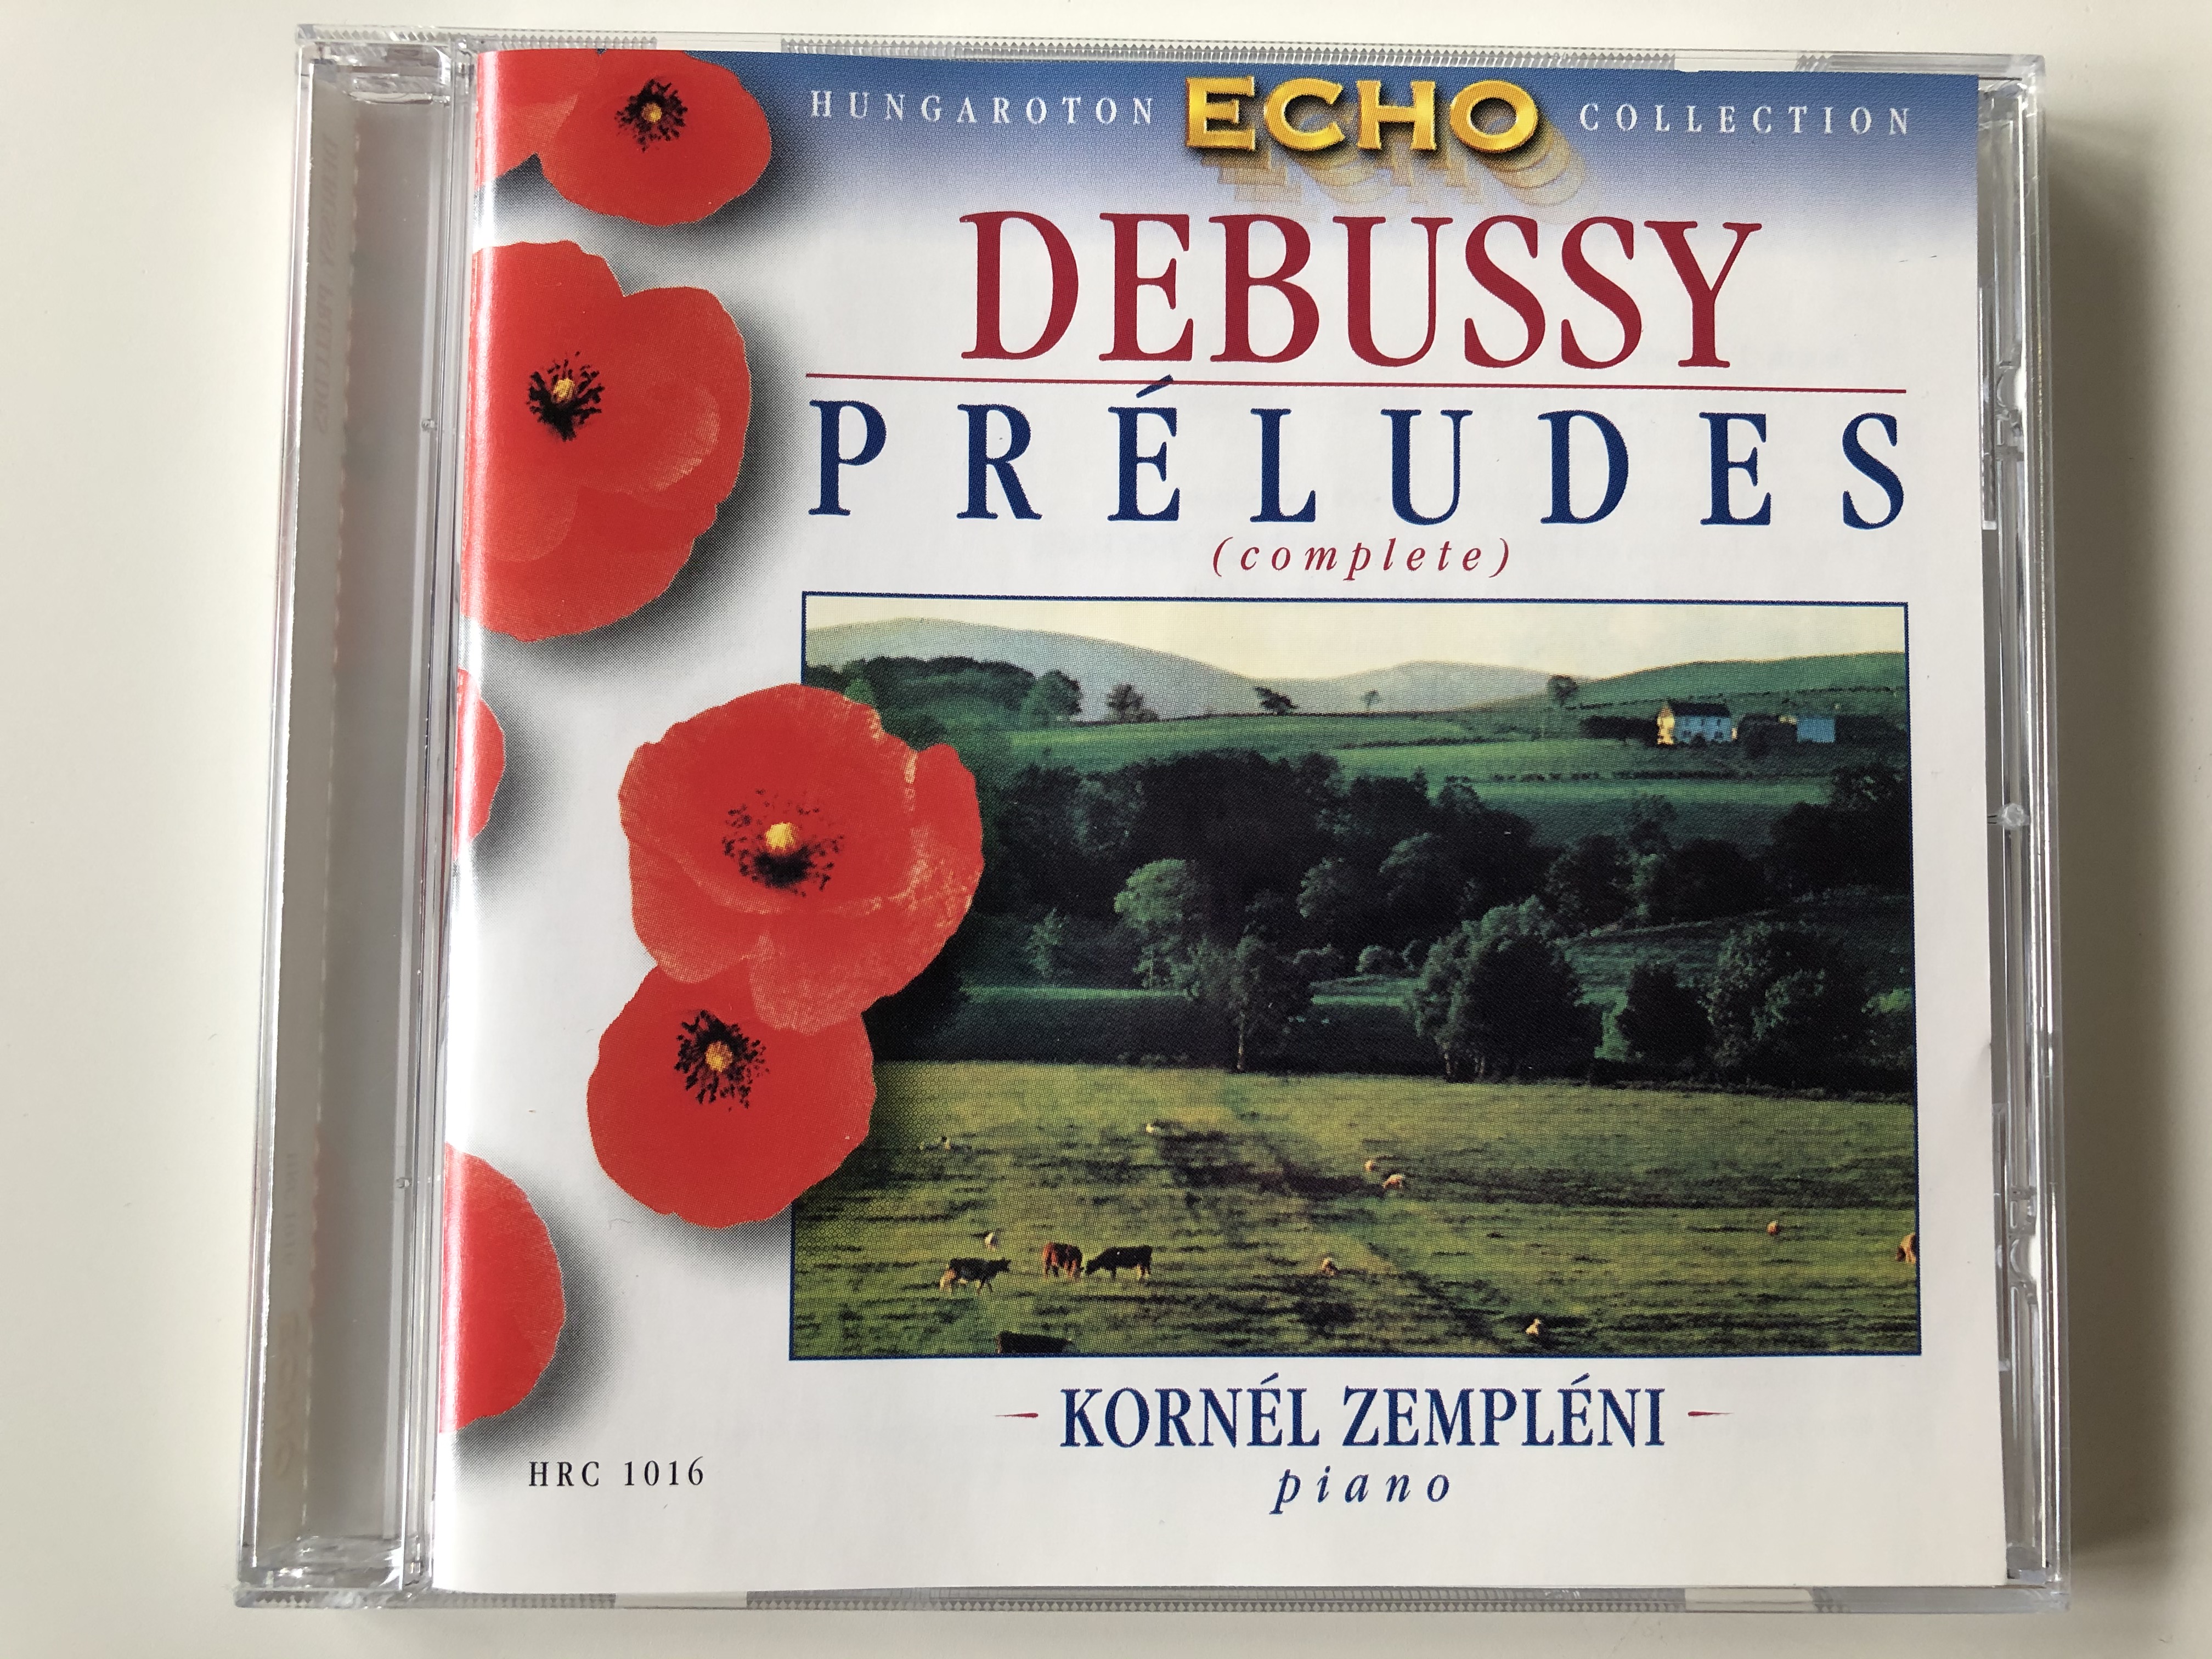 debussy-pr-ludes-complete-korn-l-zempl-ni-piano-hungaroton-classic-audio-cd-1999-stereo-hrc-1016-1-.jpg